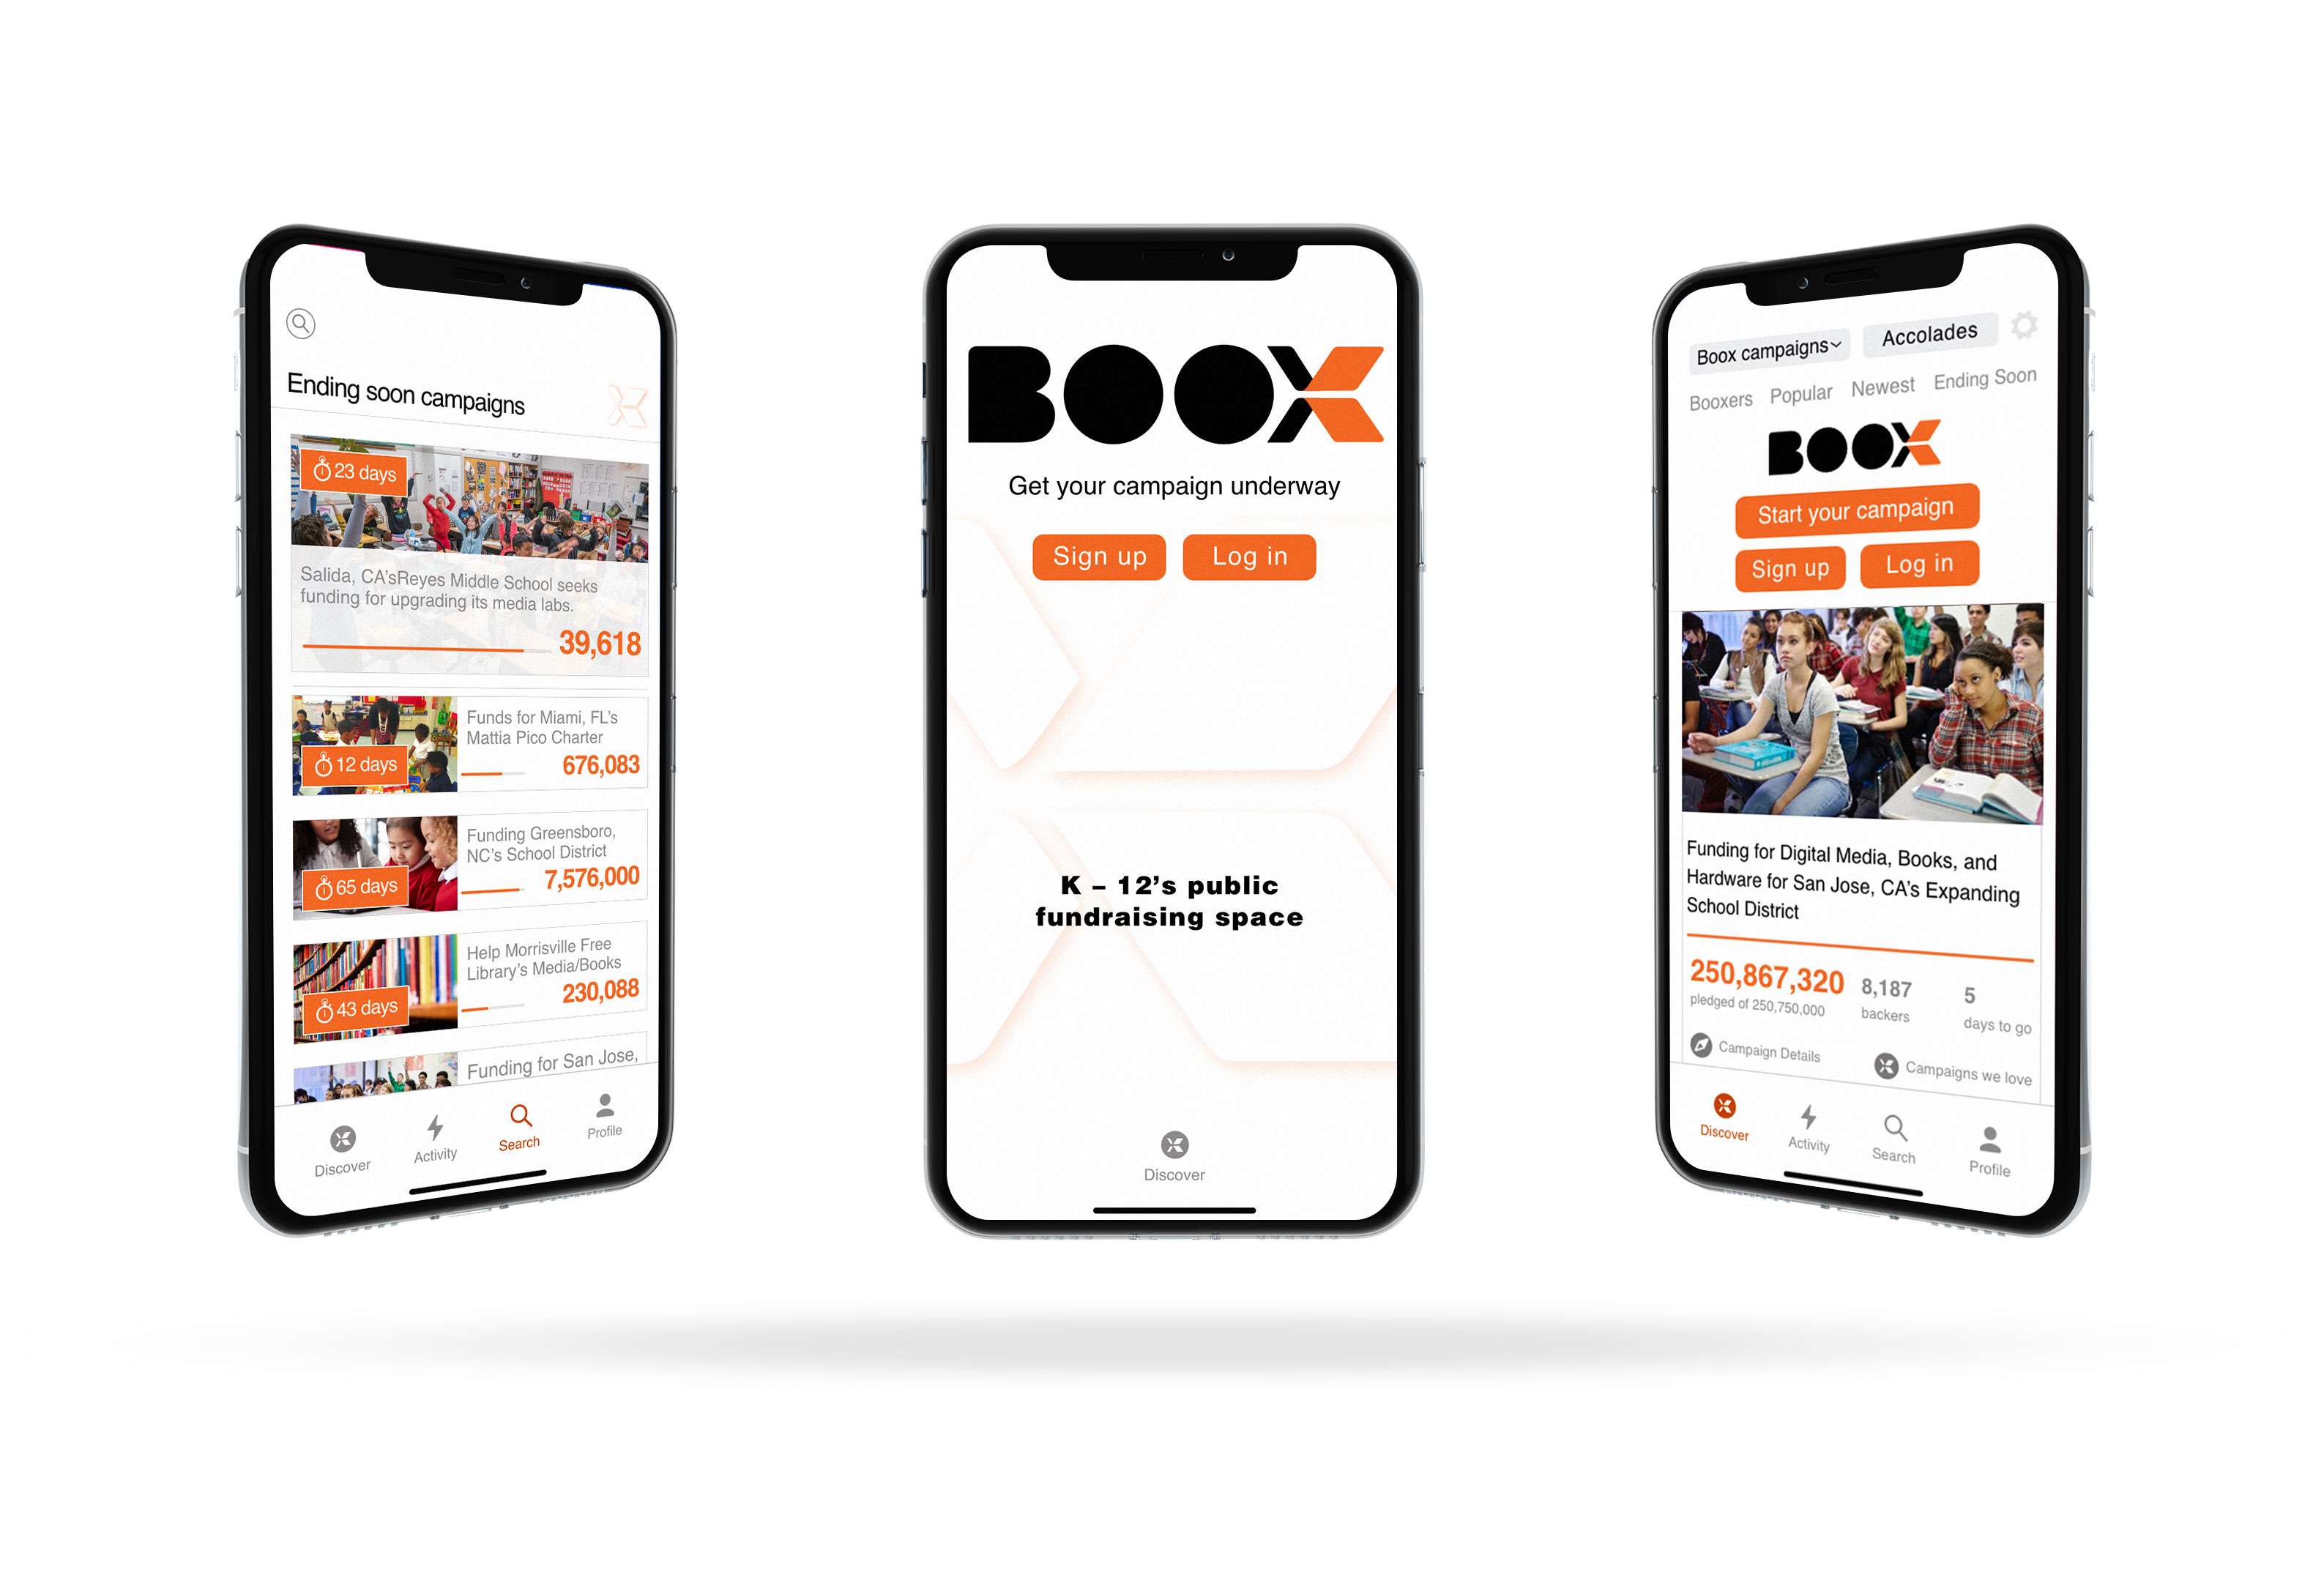 Three Boox app UI screenshots 1 – 3 for mobile.